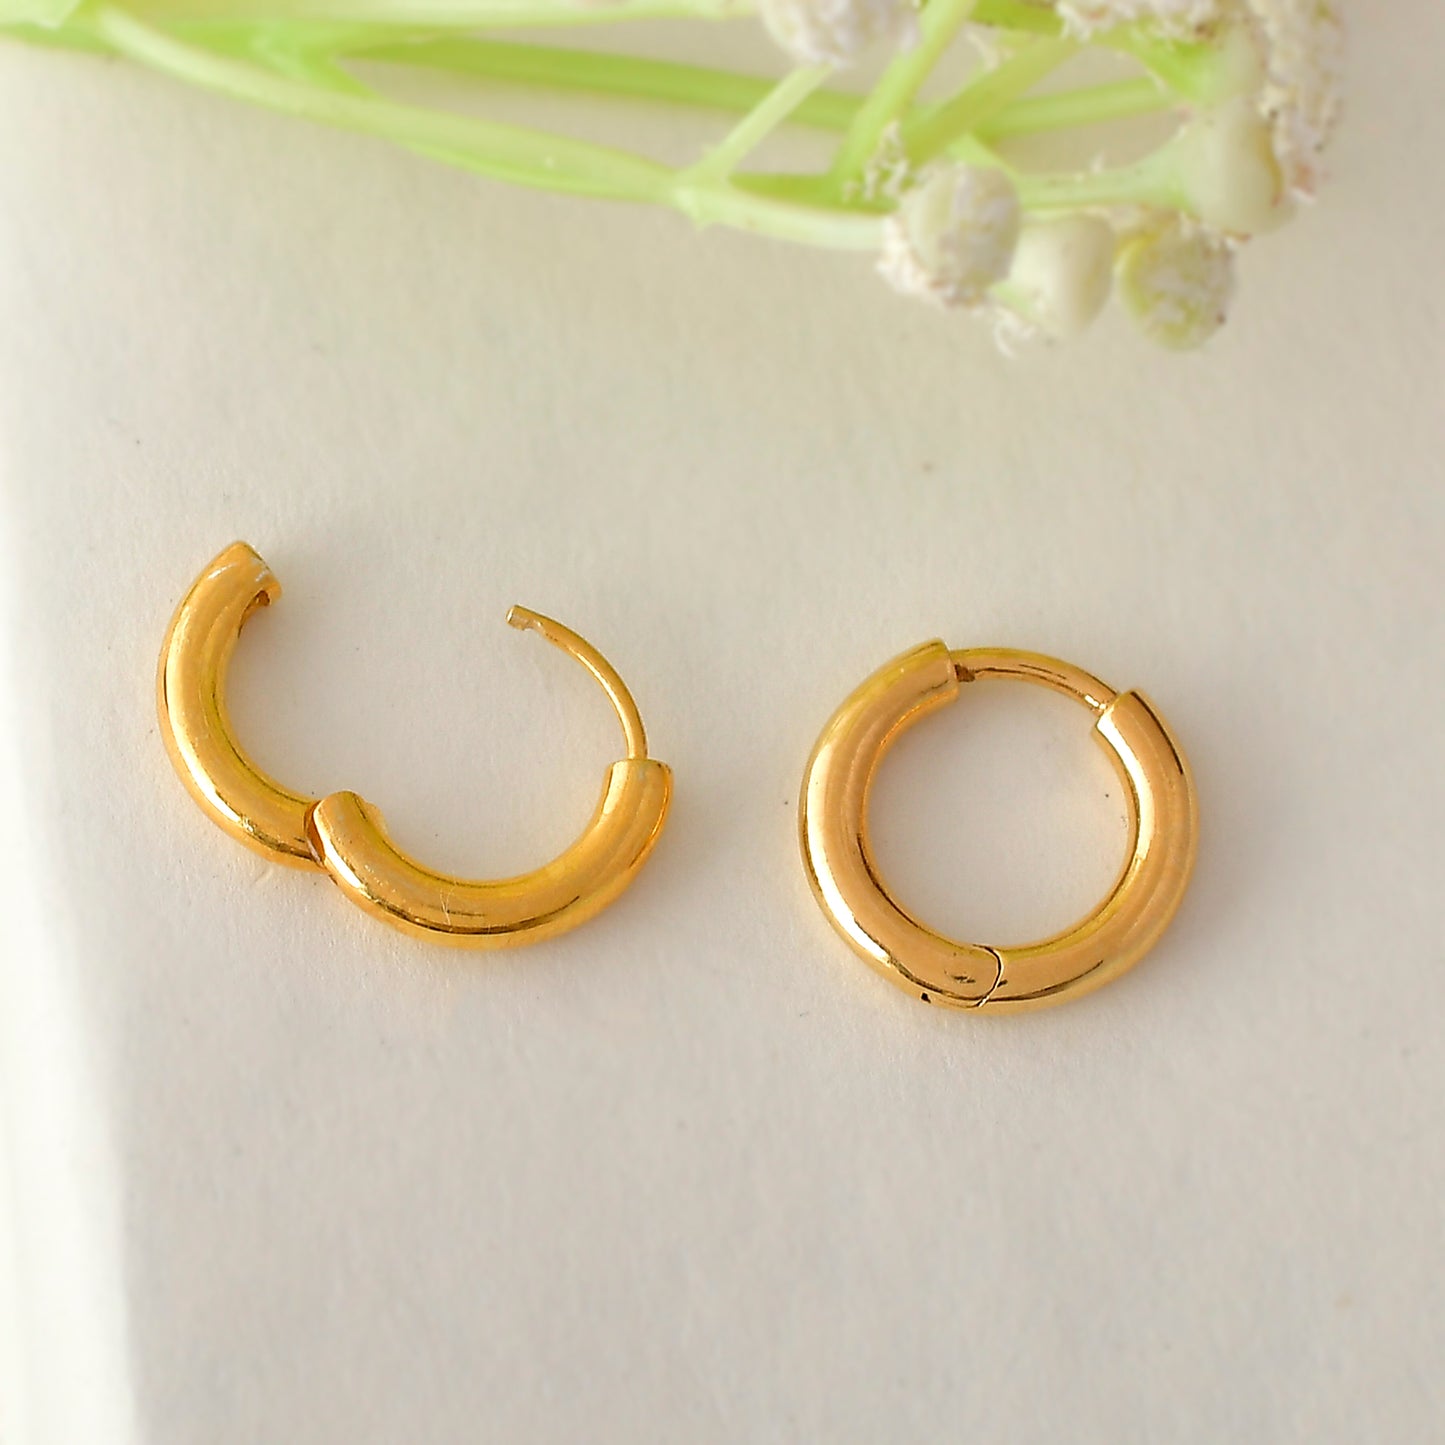 Silver Earrings Sparkling Gold Plated Bali Hoop Earrings Image 2